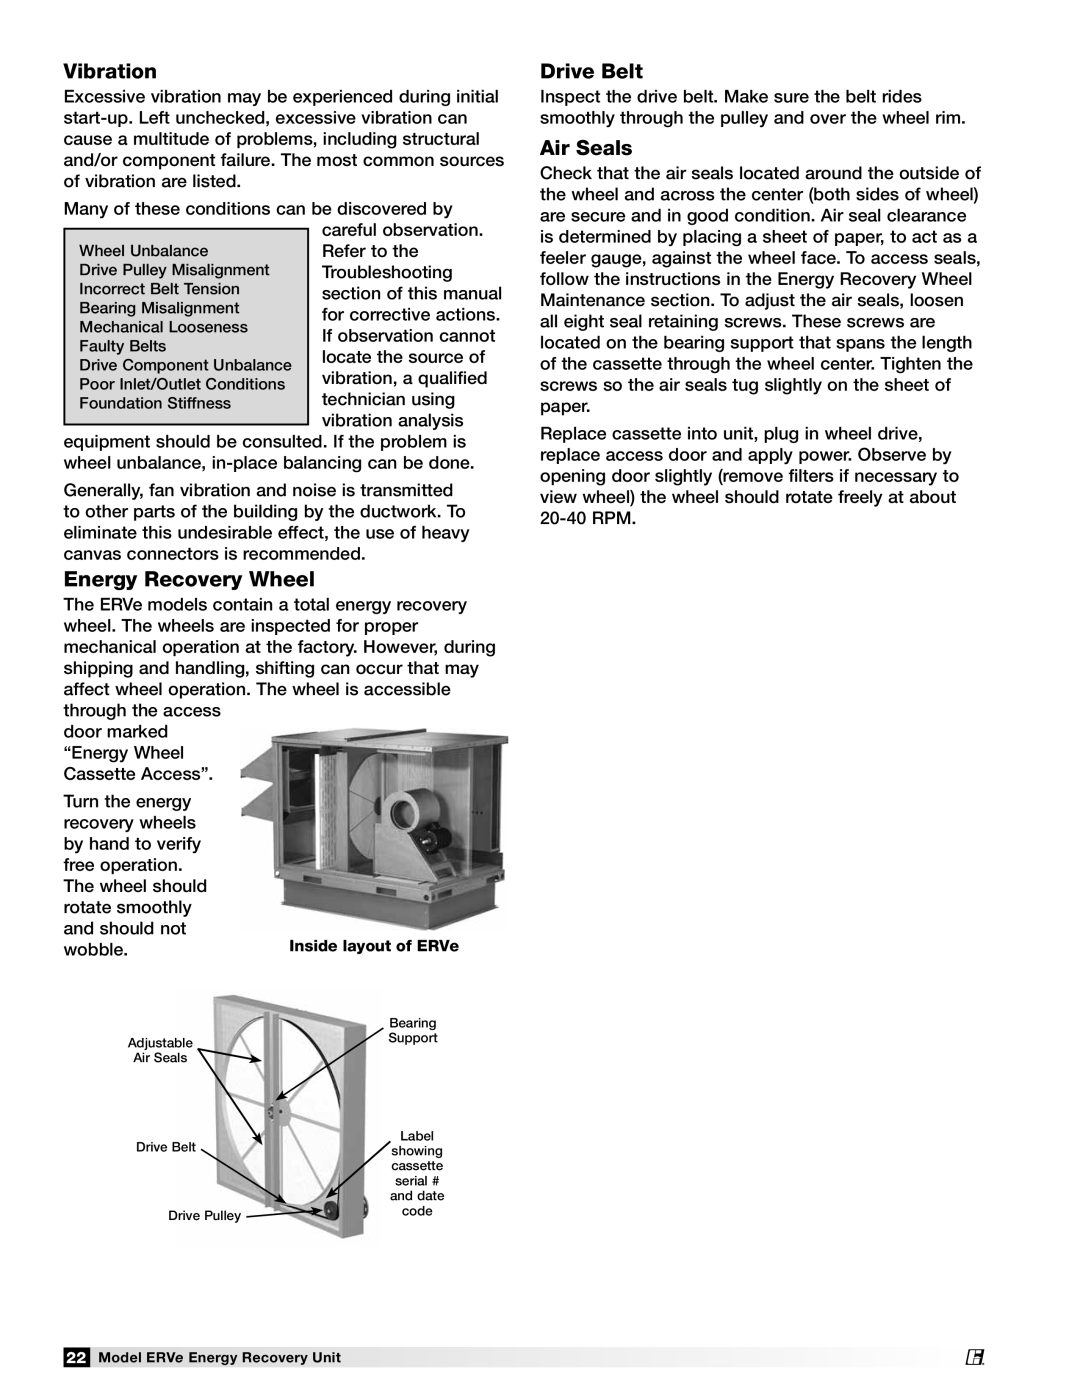 Greenheck Fan ERVe manual Vibration, Energy Recovery Wheel, Drive Belt, Air Seals 